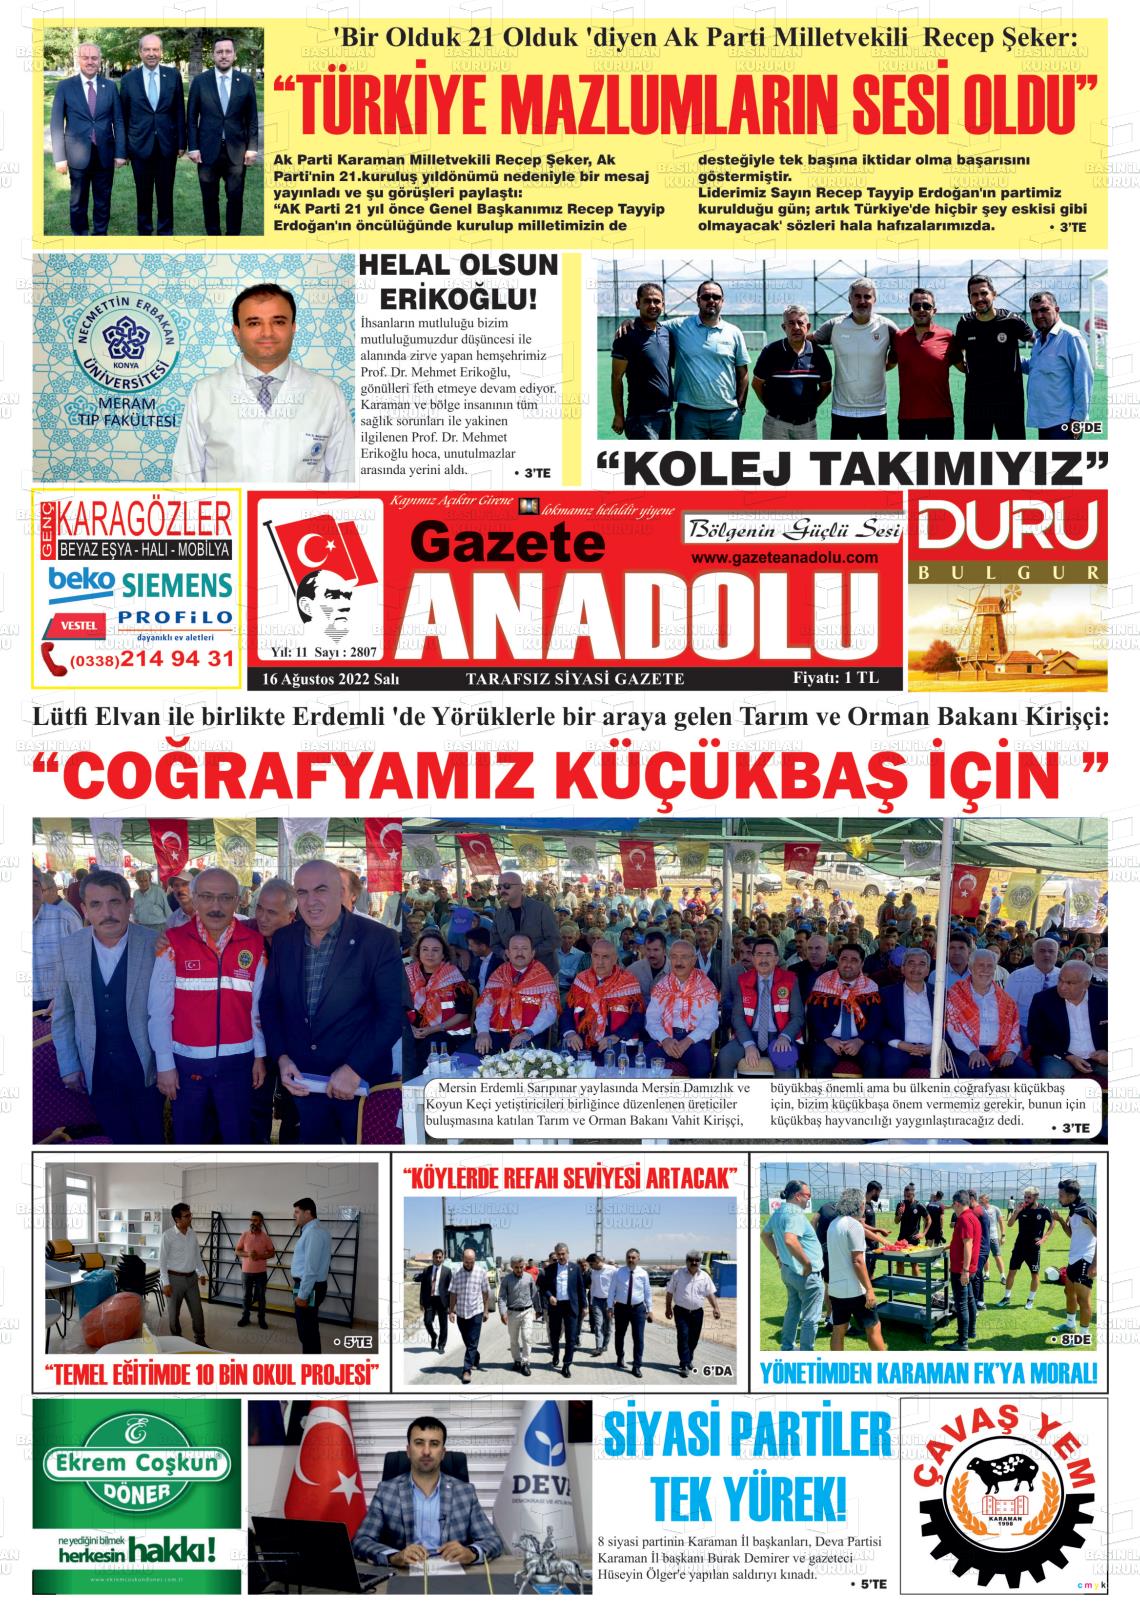 16 Ağustos 2022 Gazete Anadolu Gazete Manşeti